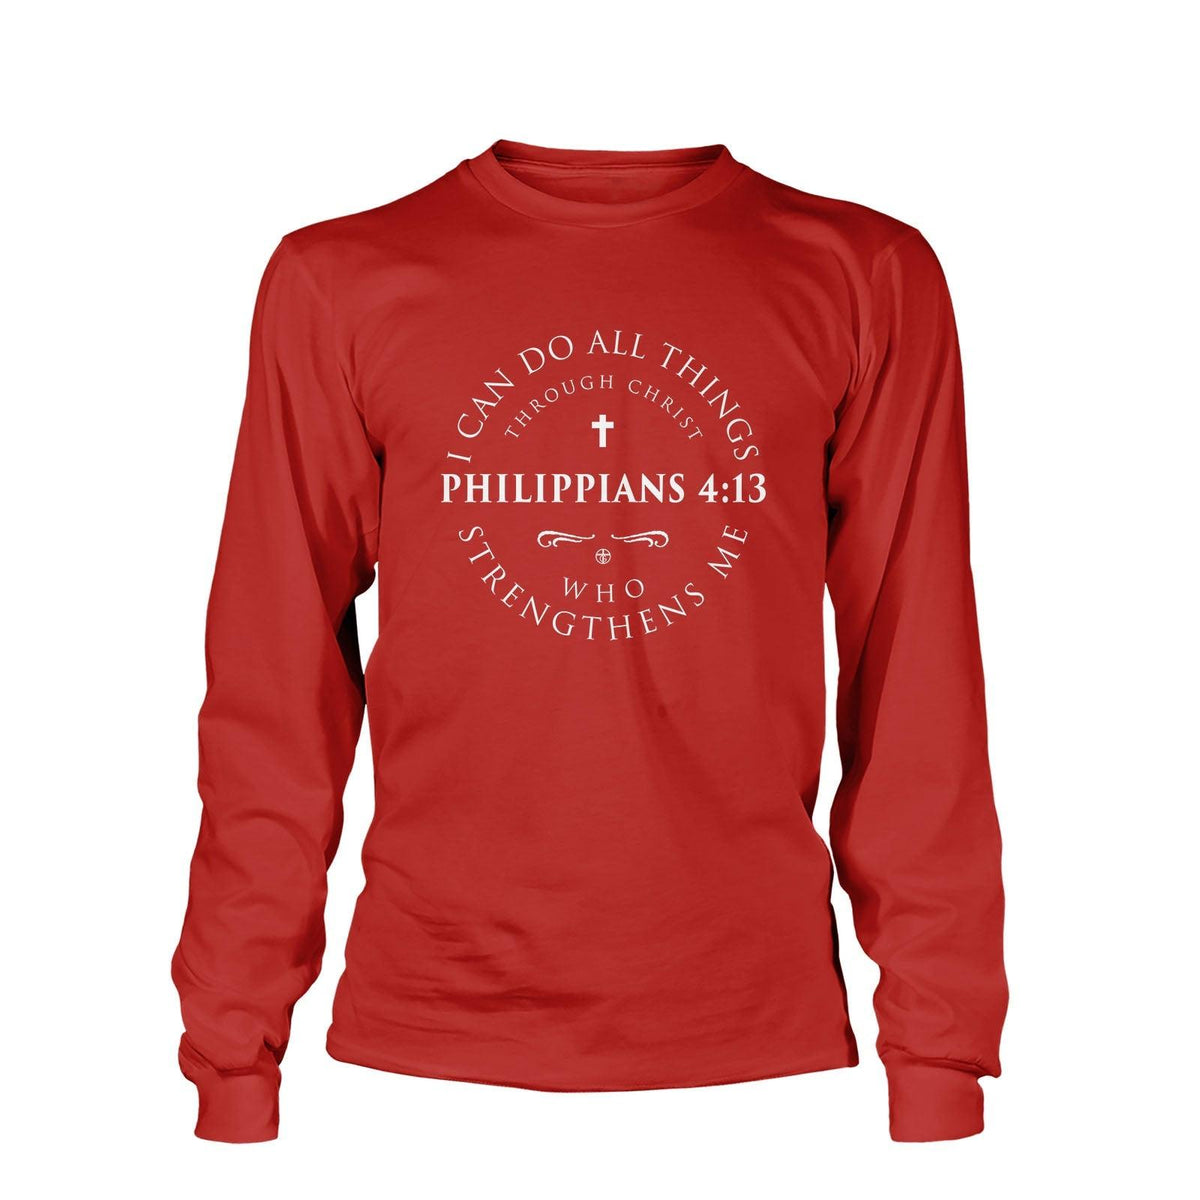 Philippians 4:13 Long Sleeve T-Shirt